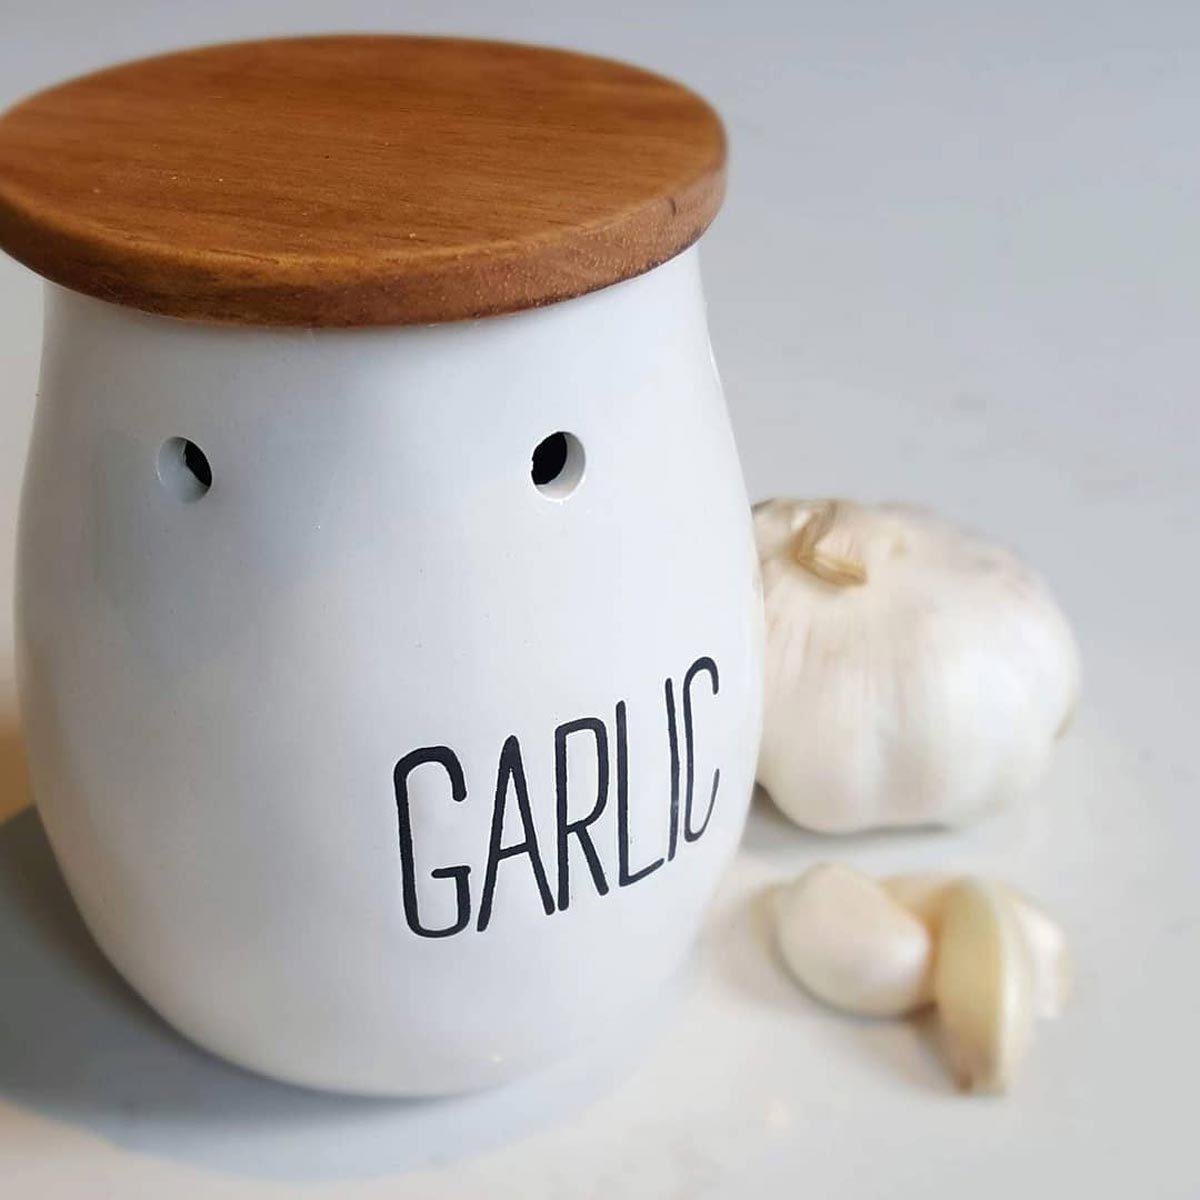 Transparent Kitchen Fruit Saver Vegetable Keeper for Garlic Onion